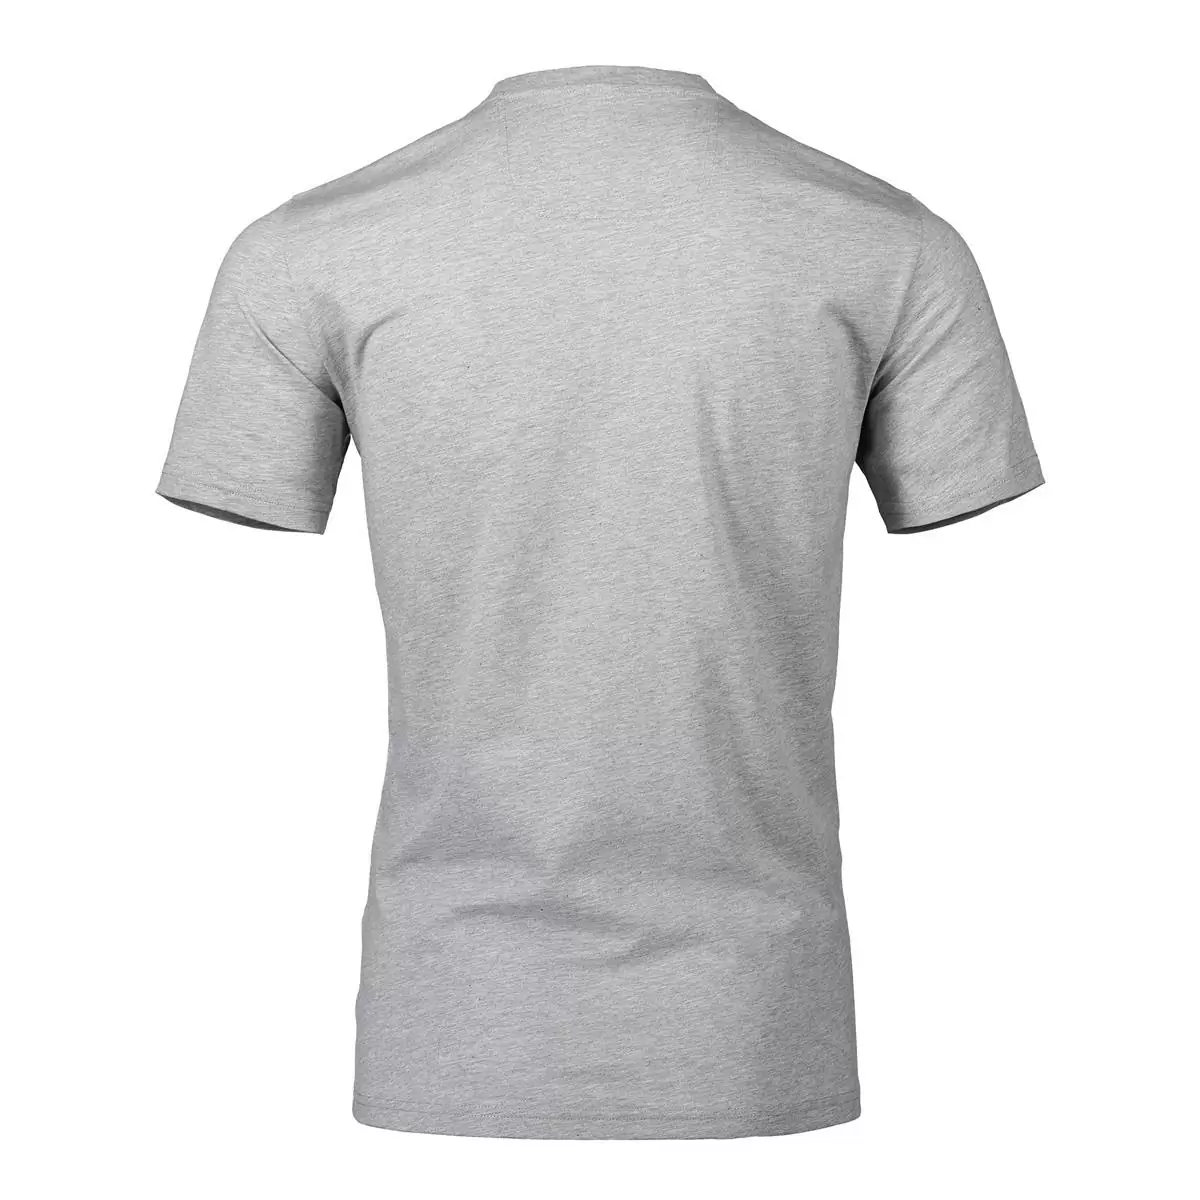 camiseta de manga curta cinza tamanho L #1